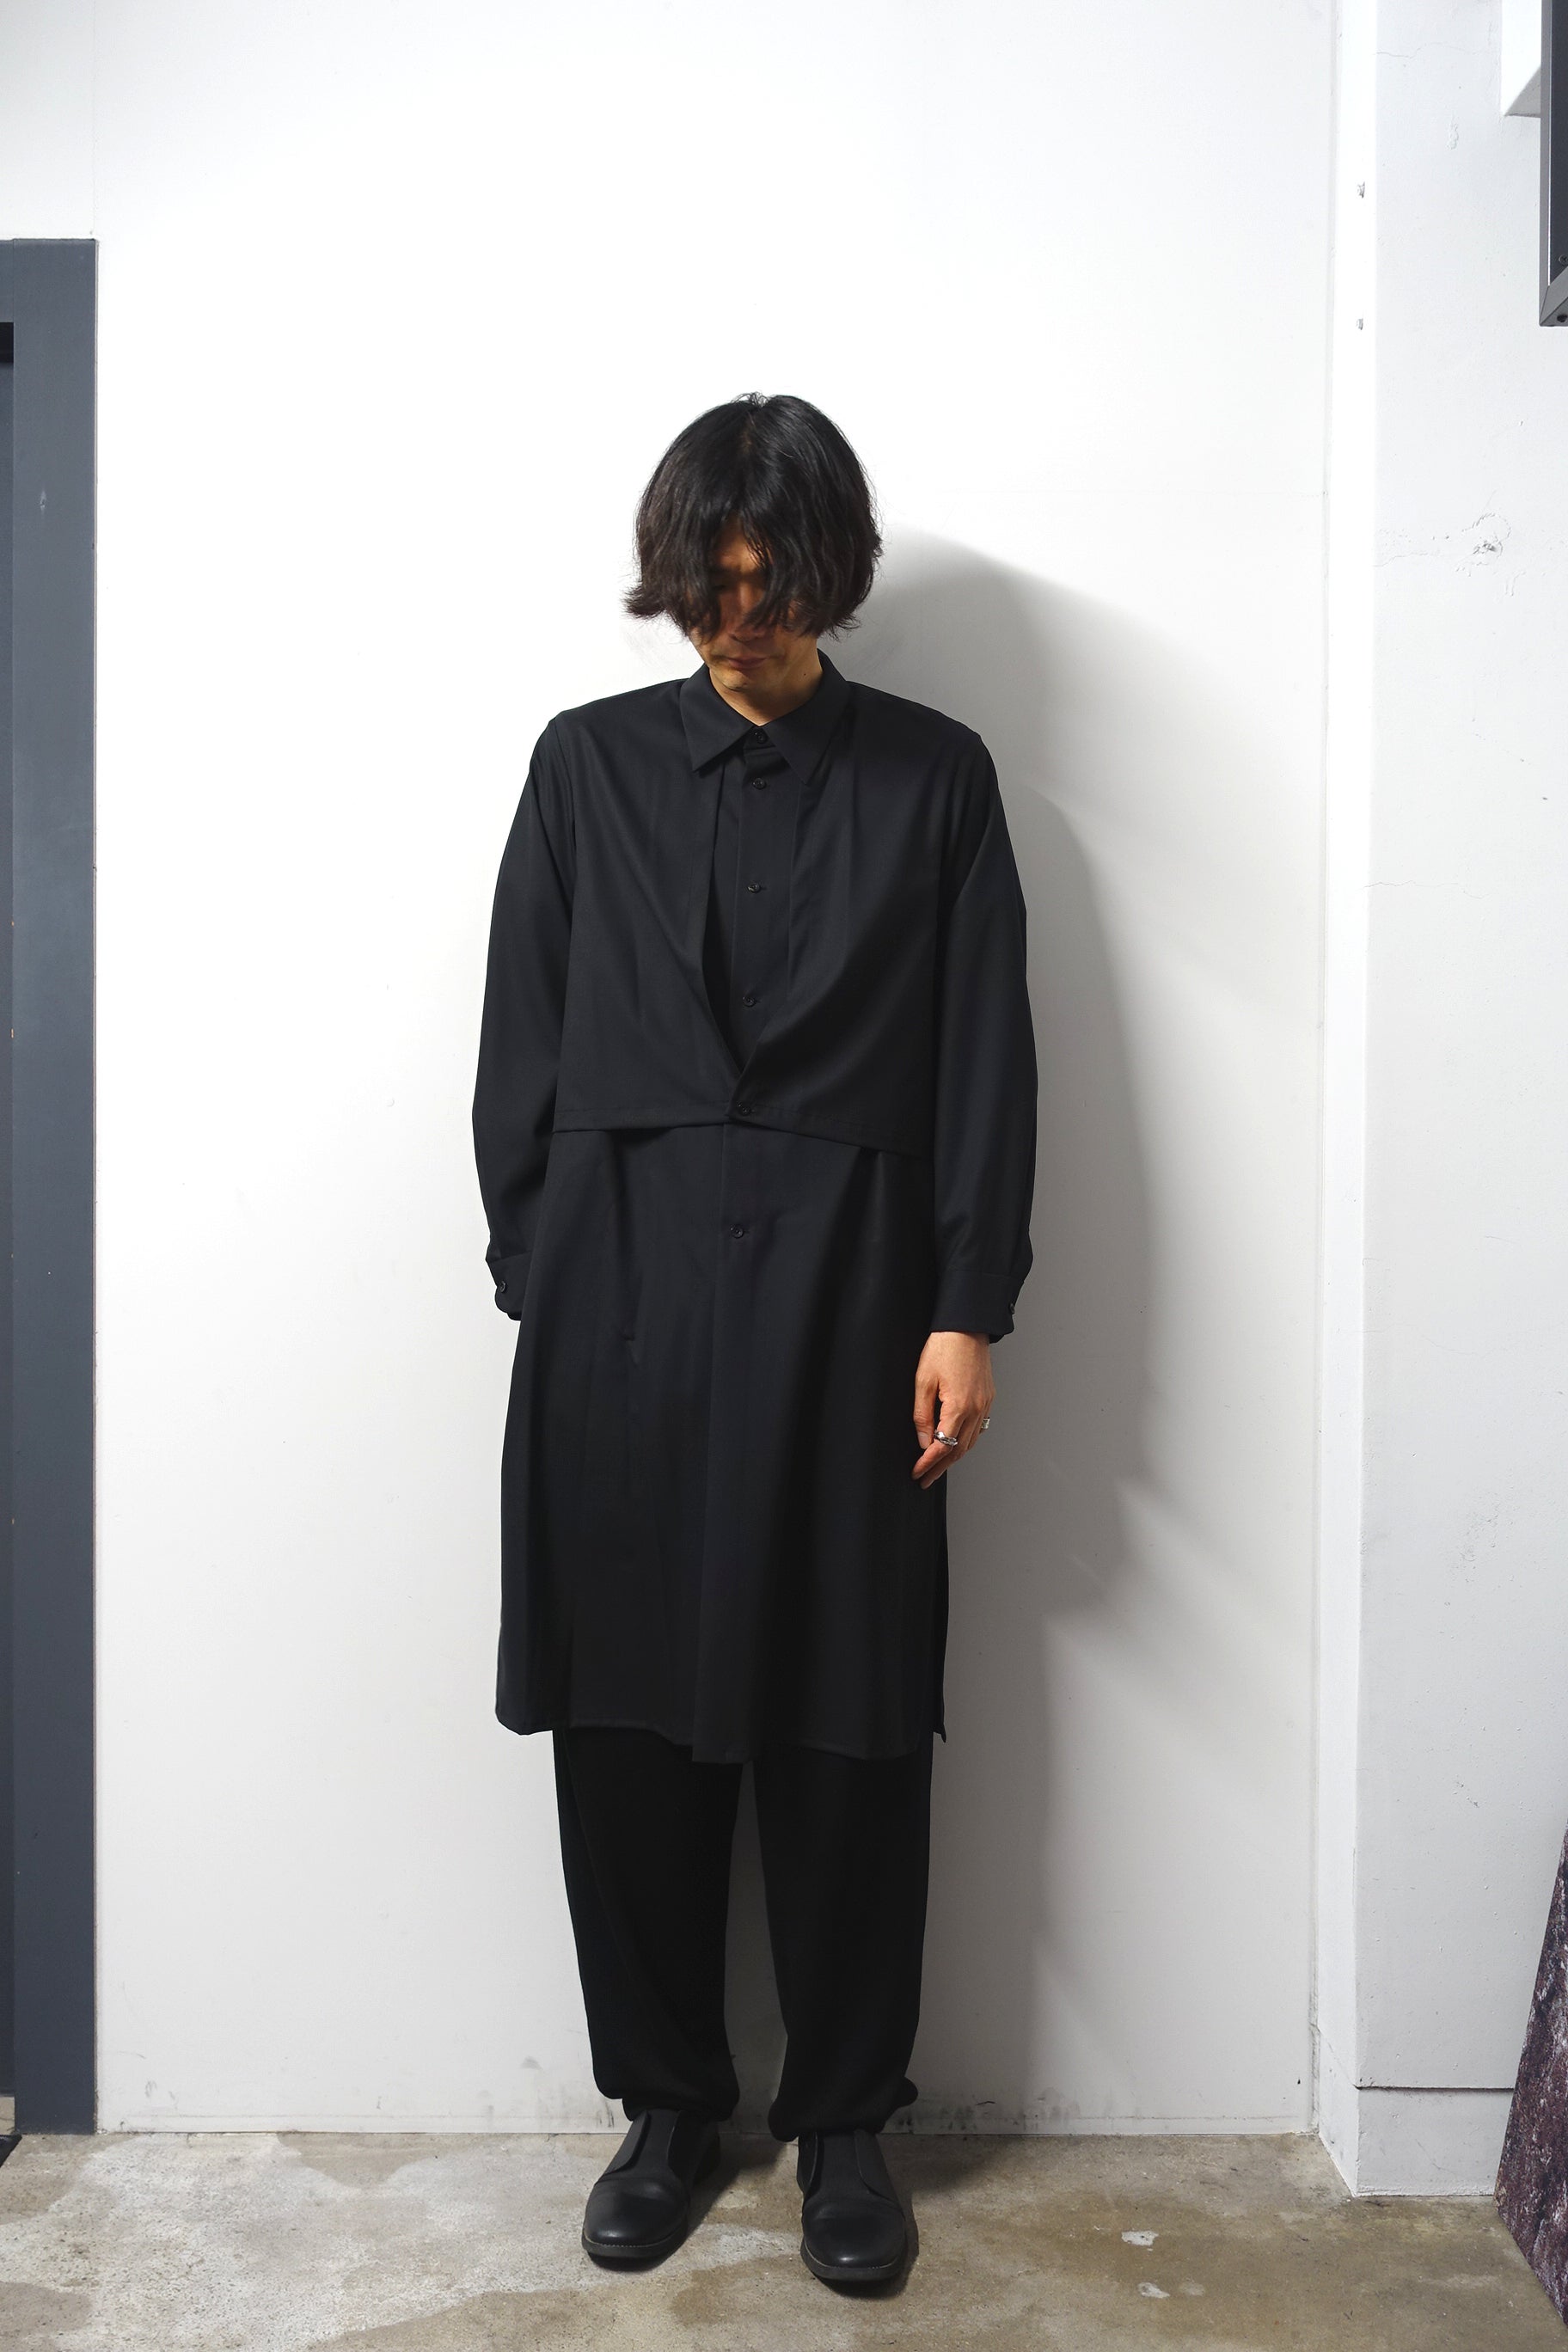 ETHOSENS(エトセンス)/Coat shirt/Black 通販 取り扱い-CONCRETE RIVER